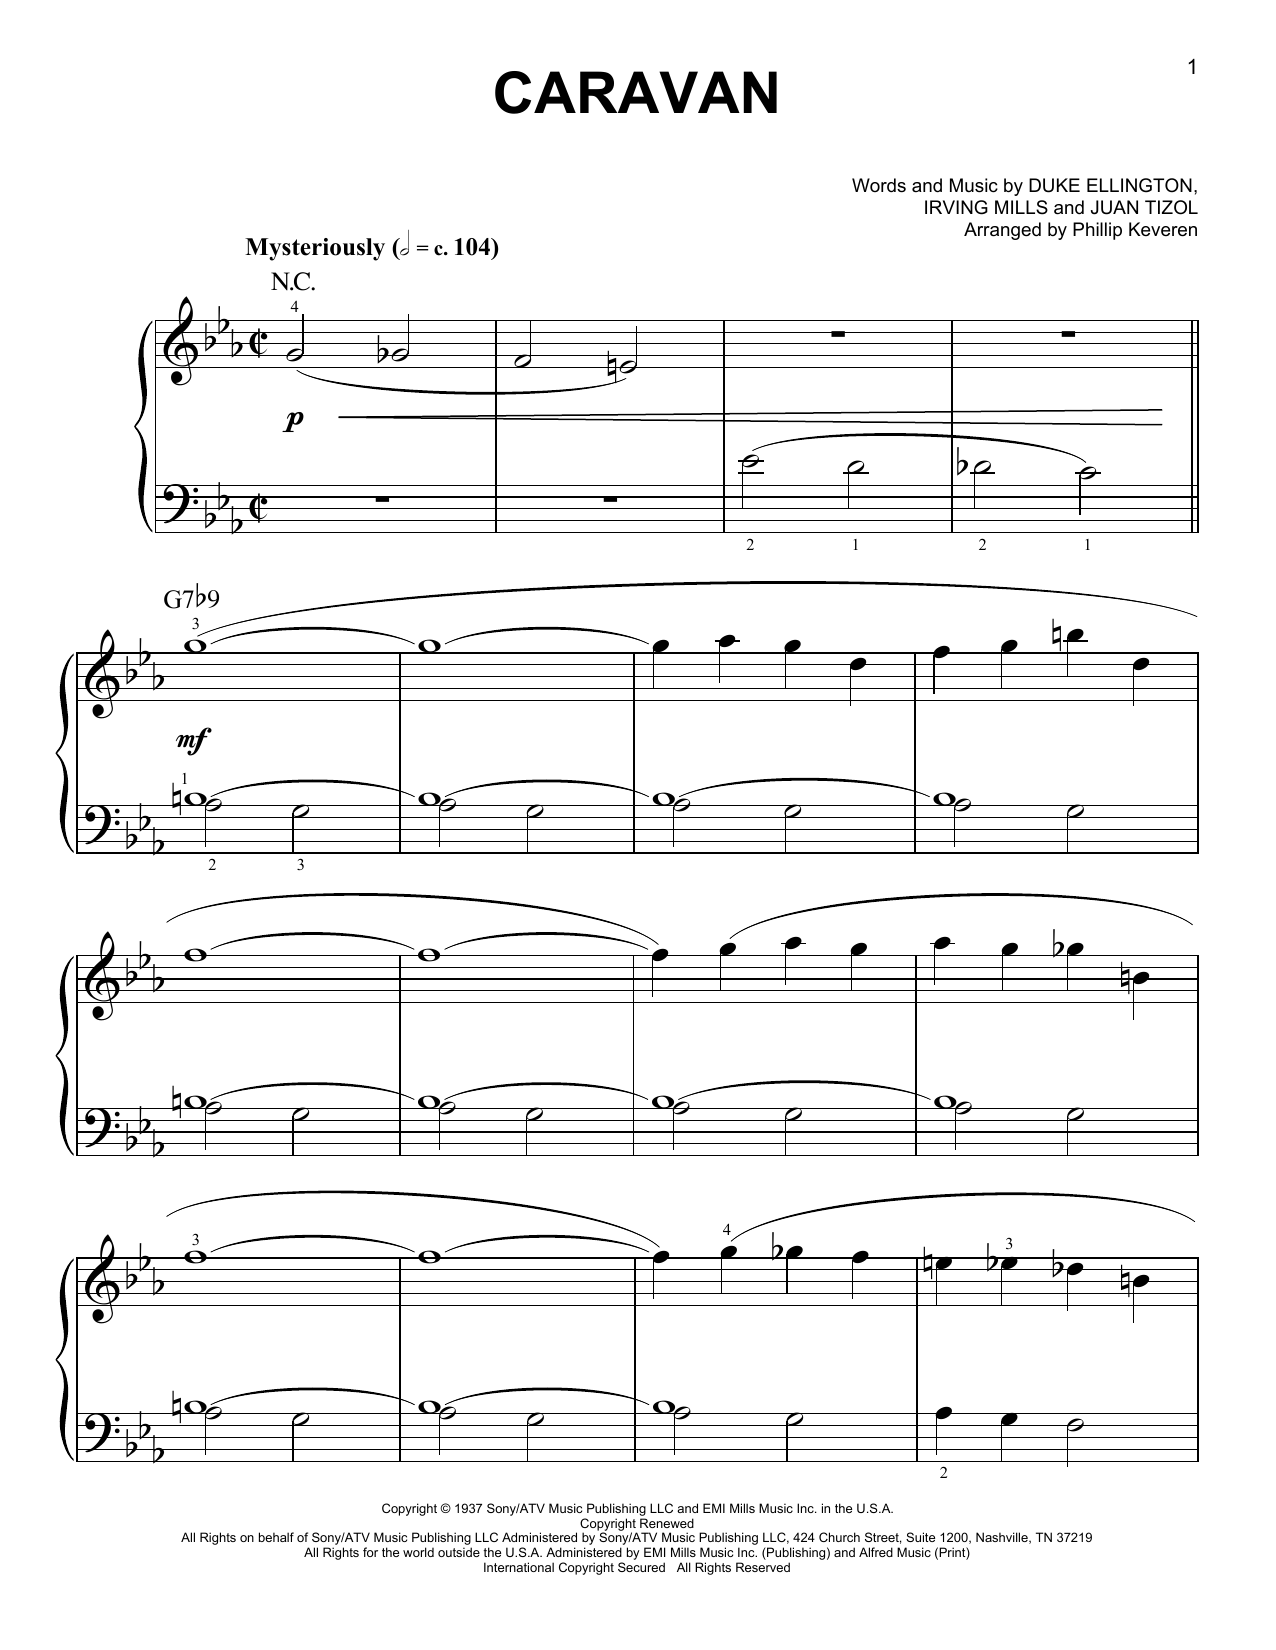 Duke Ellington Caravan (arr. Phillip Keveren) Sheet Music Notes & Chords for Easy Piano - Download or Print PDF